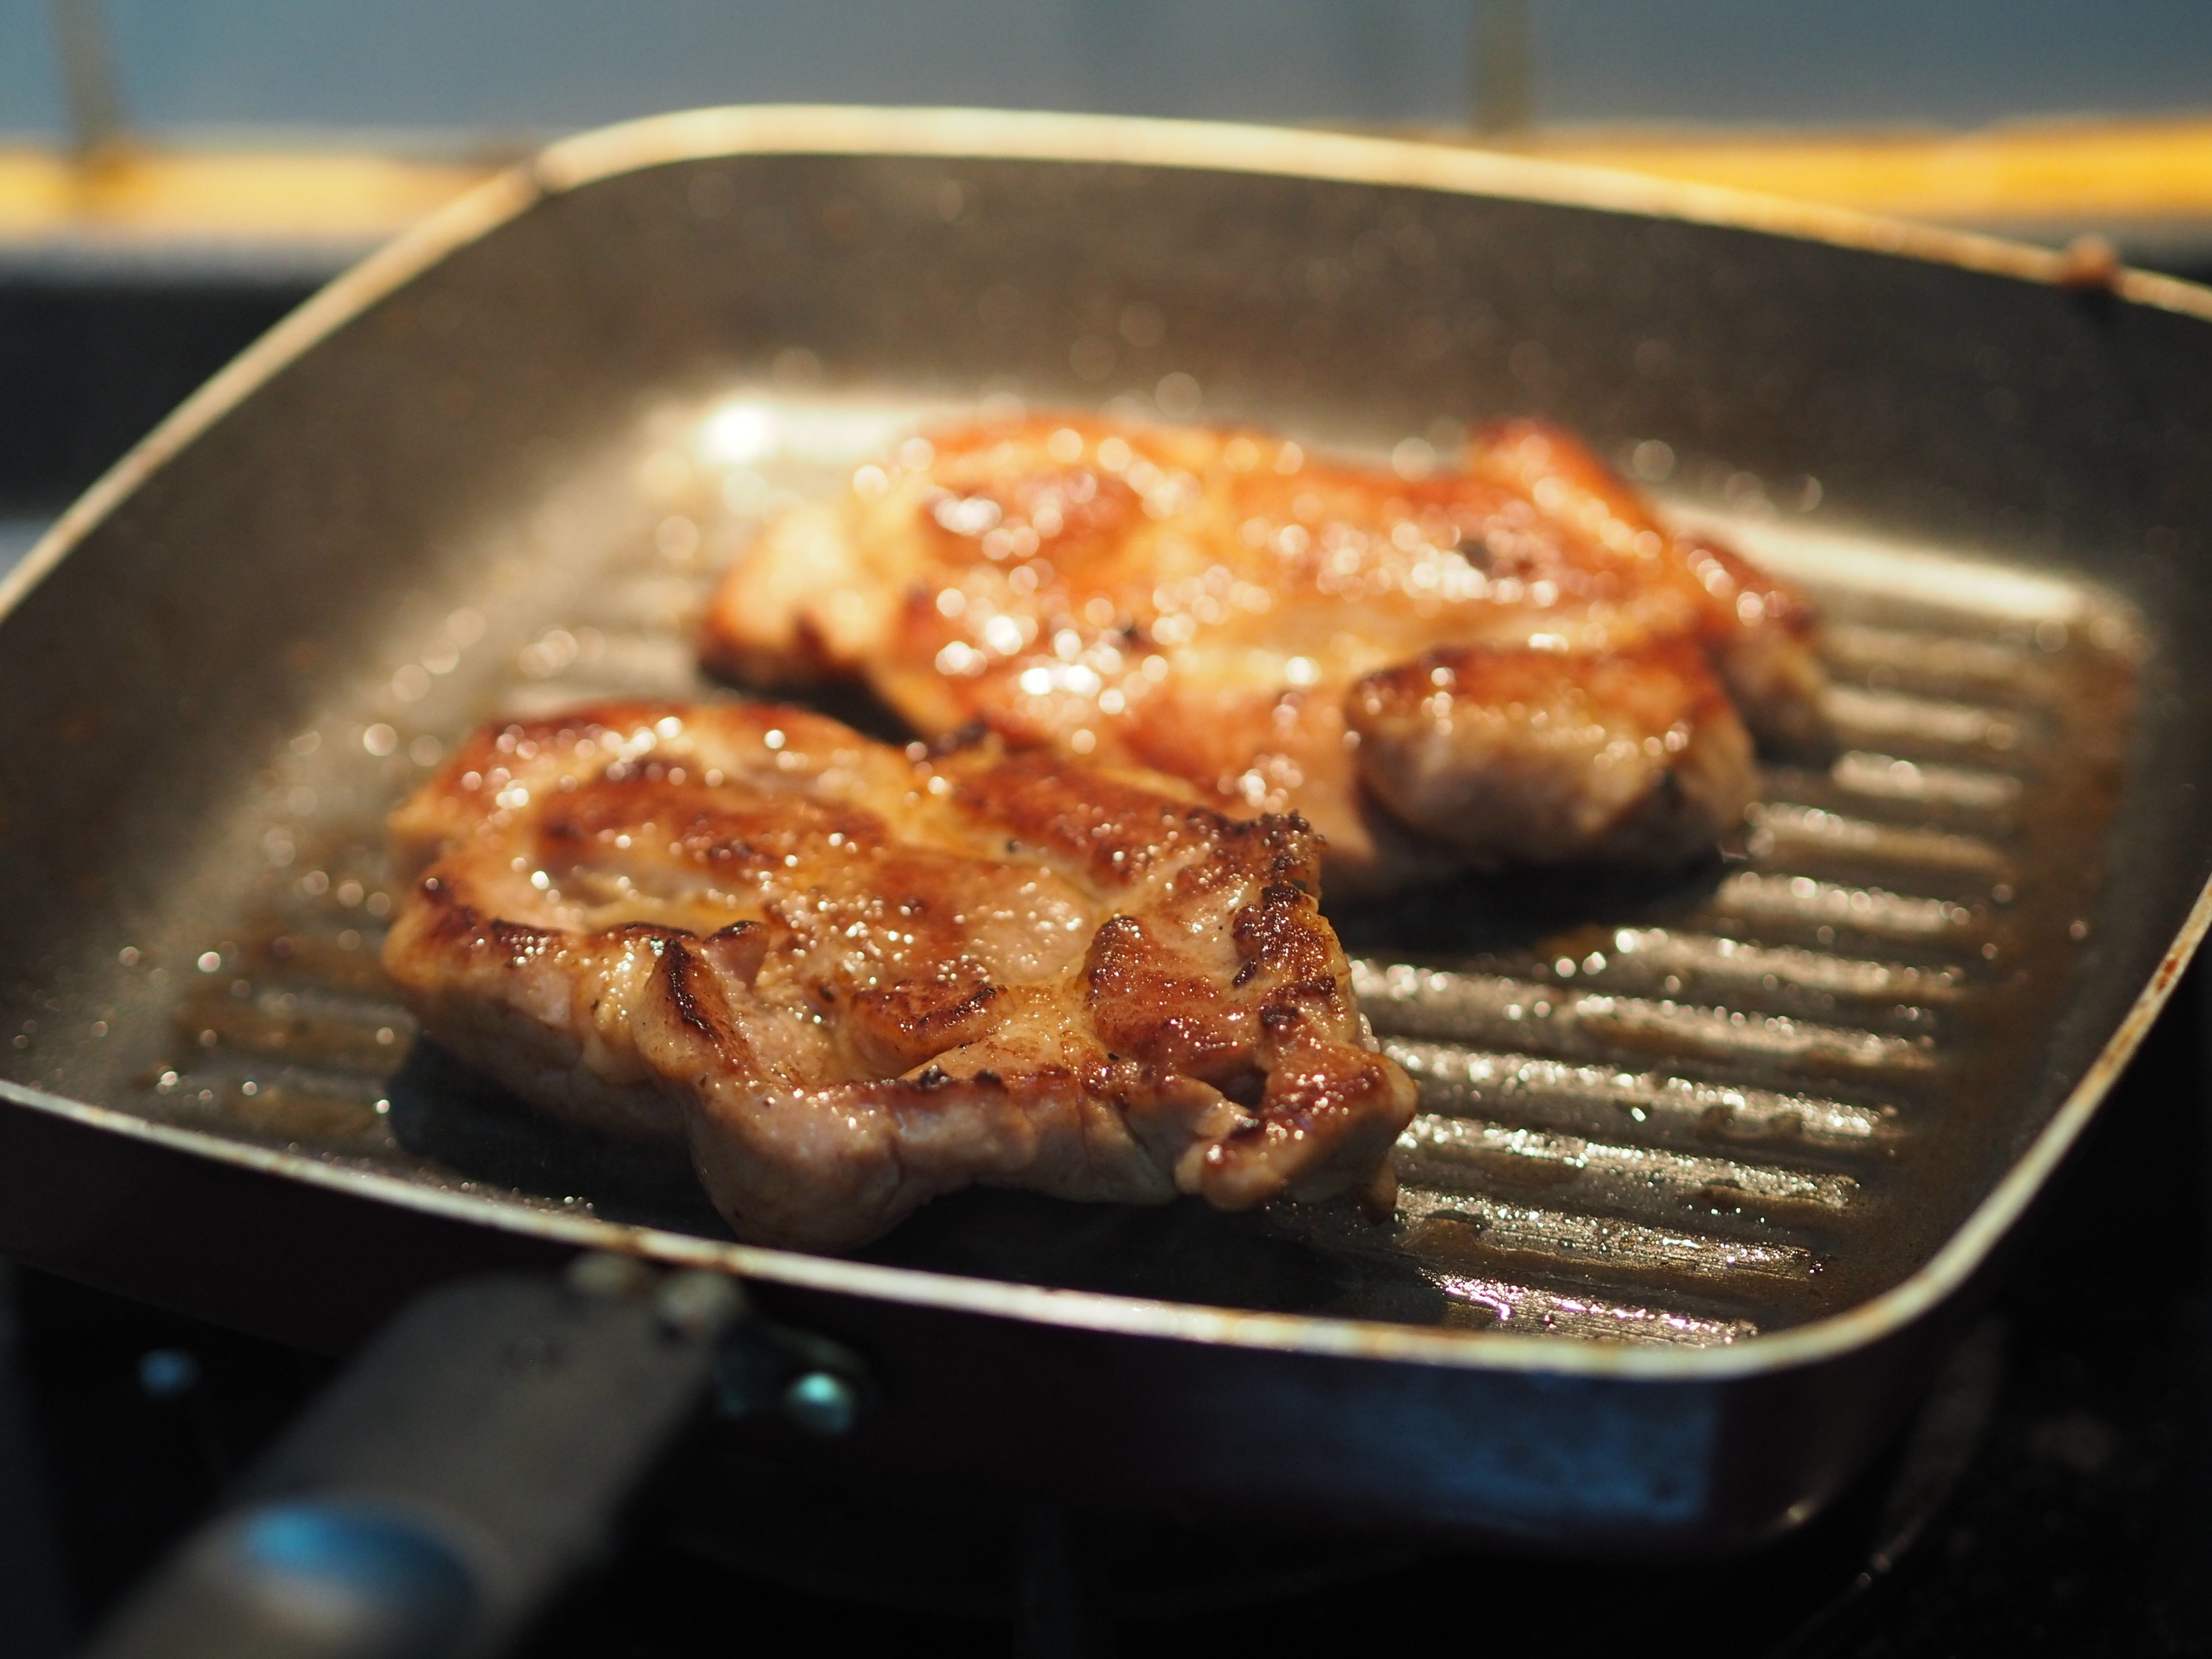 Pork chops cooking in a pan